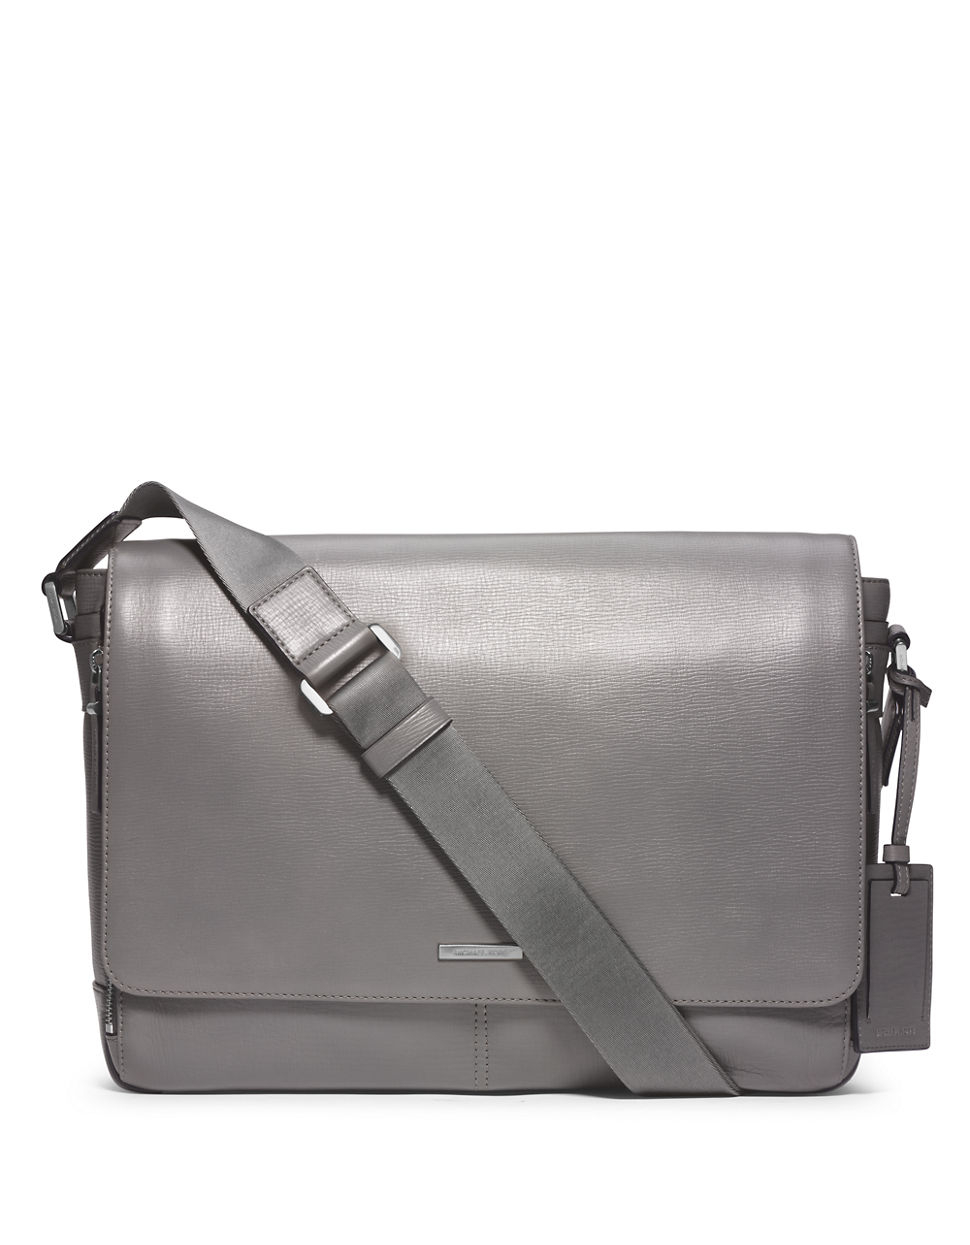 Lyst - Michael Kors Warren Leather Large Messenger Bag in Gray for Men